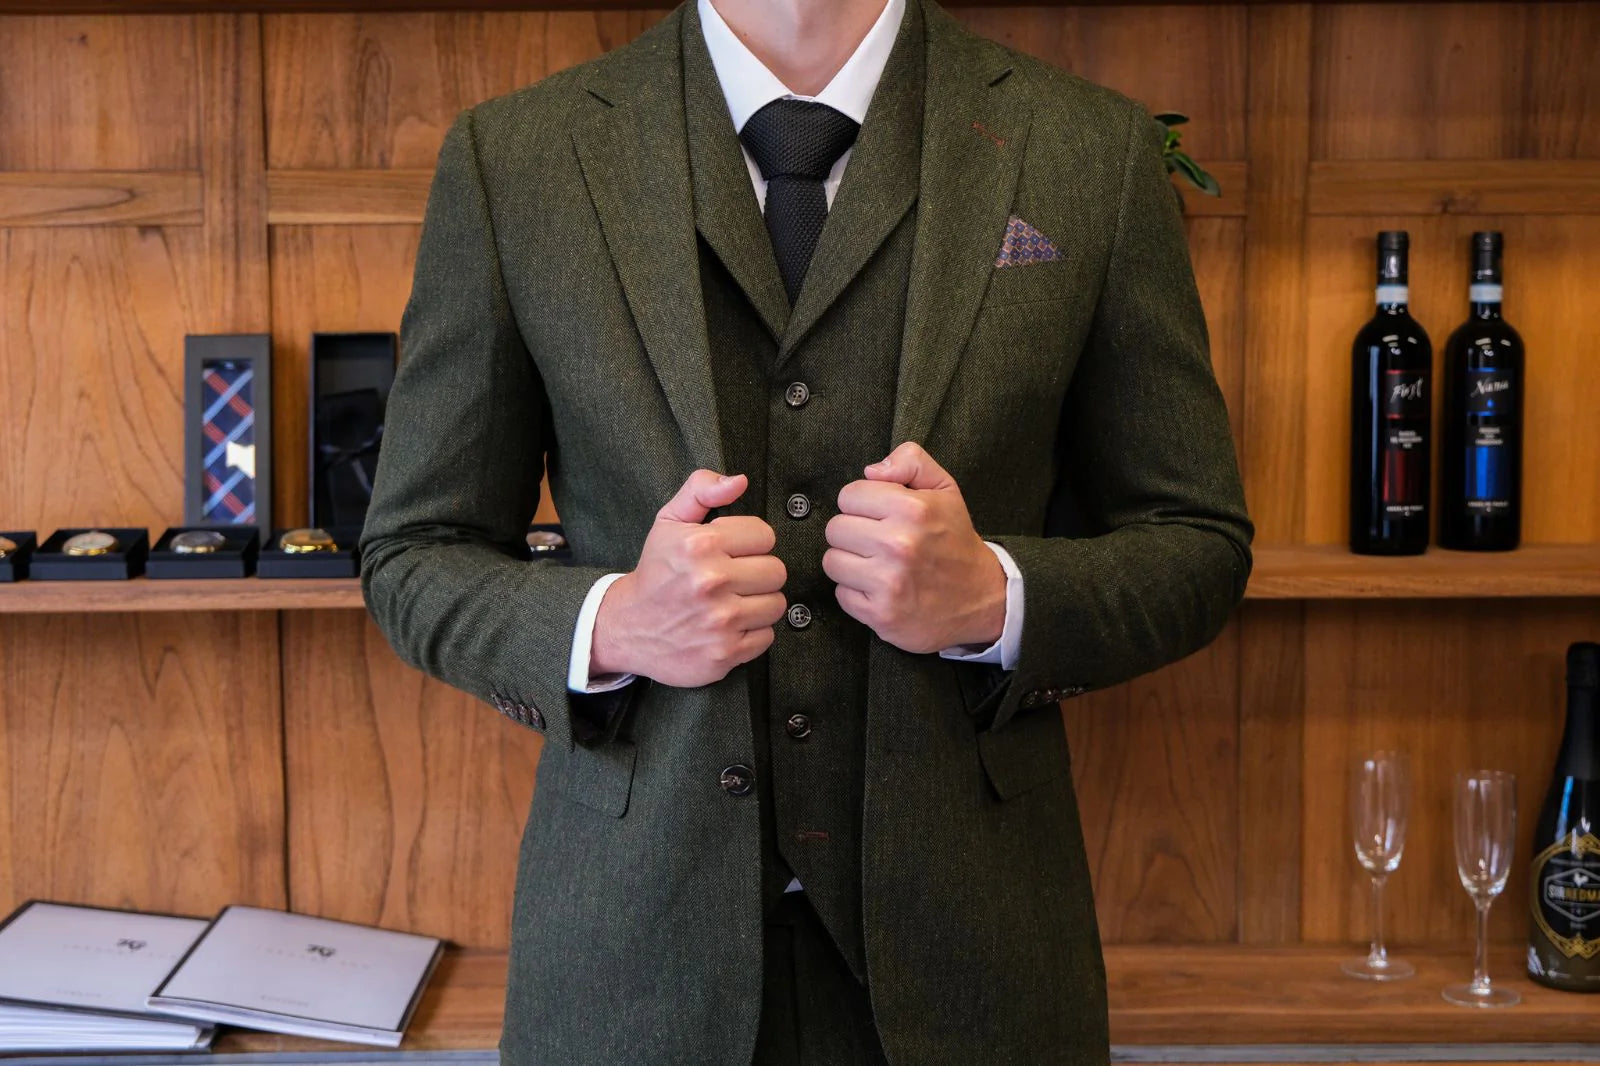 MARLOW - Olive Green Tweed Blazer – Marc Darcy